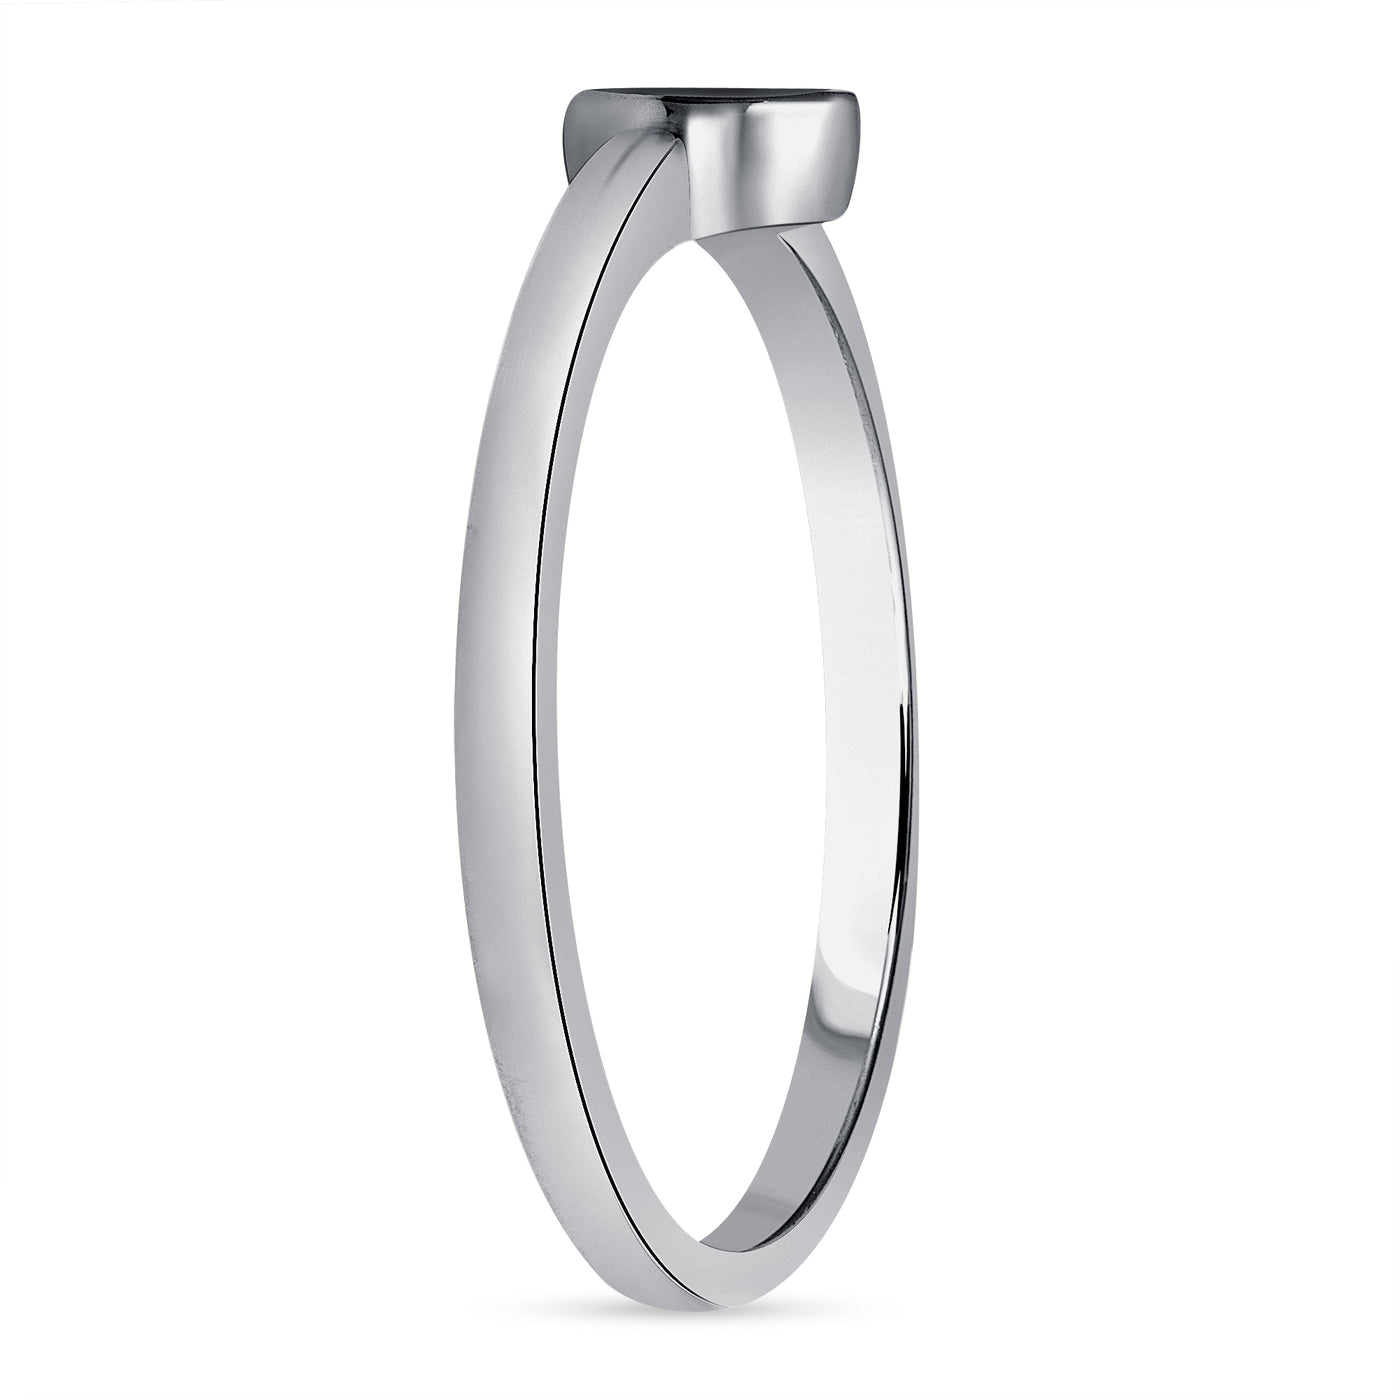 Tear Drop 0.16 Carat Round Cut Diamond Ring